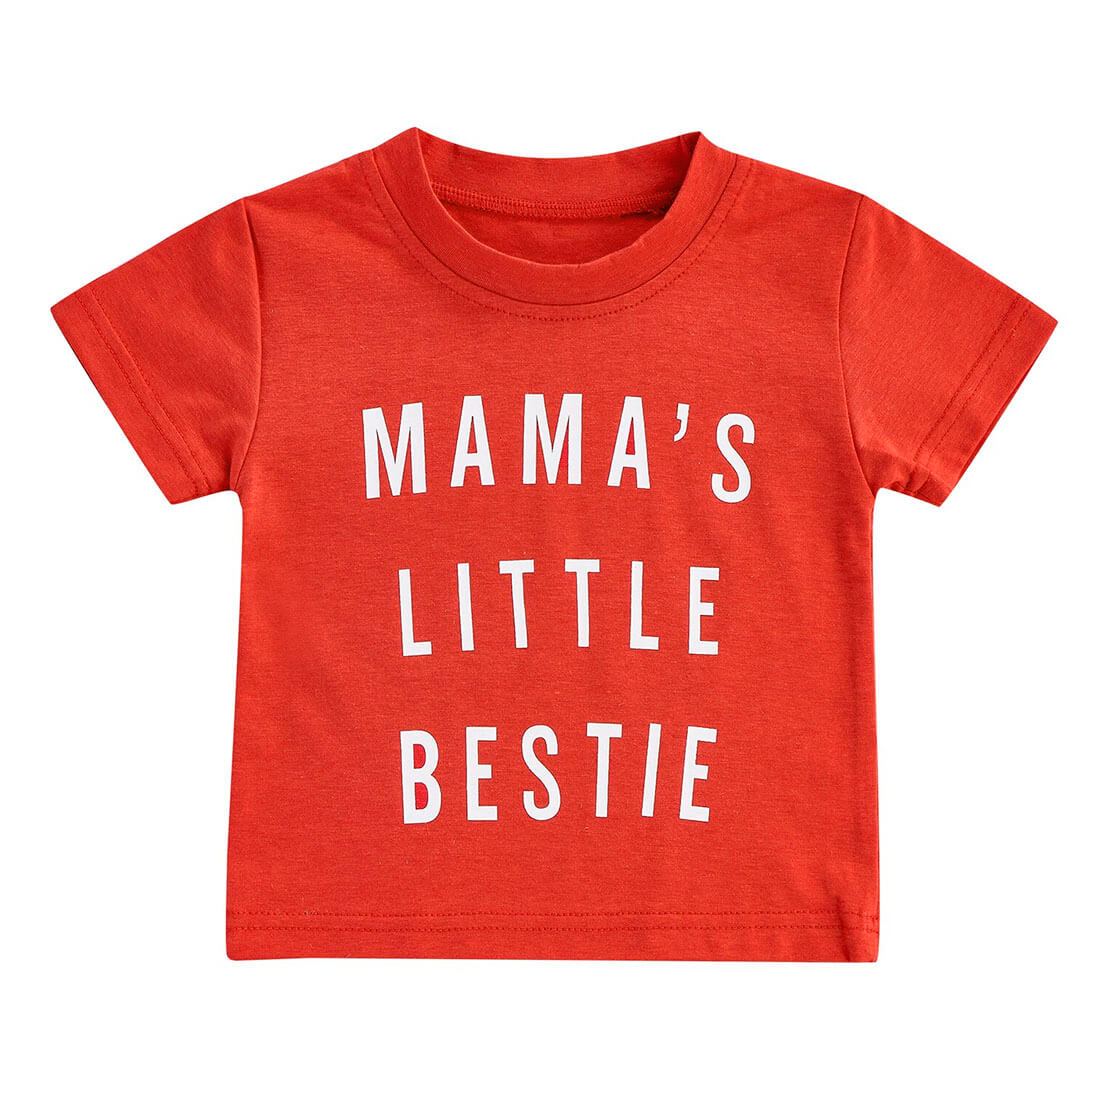 Mama's Little Bestie Toddler Tee Red 2T 